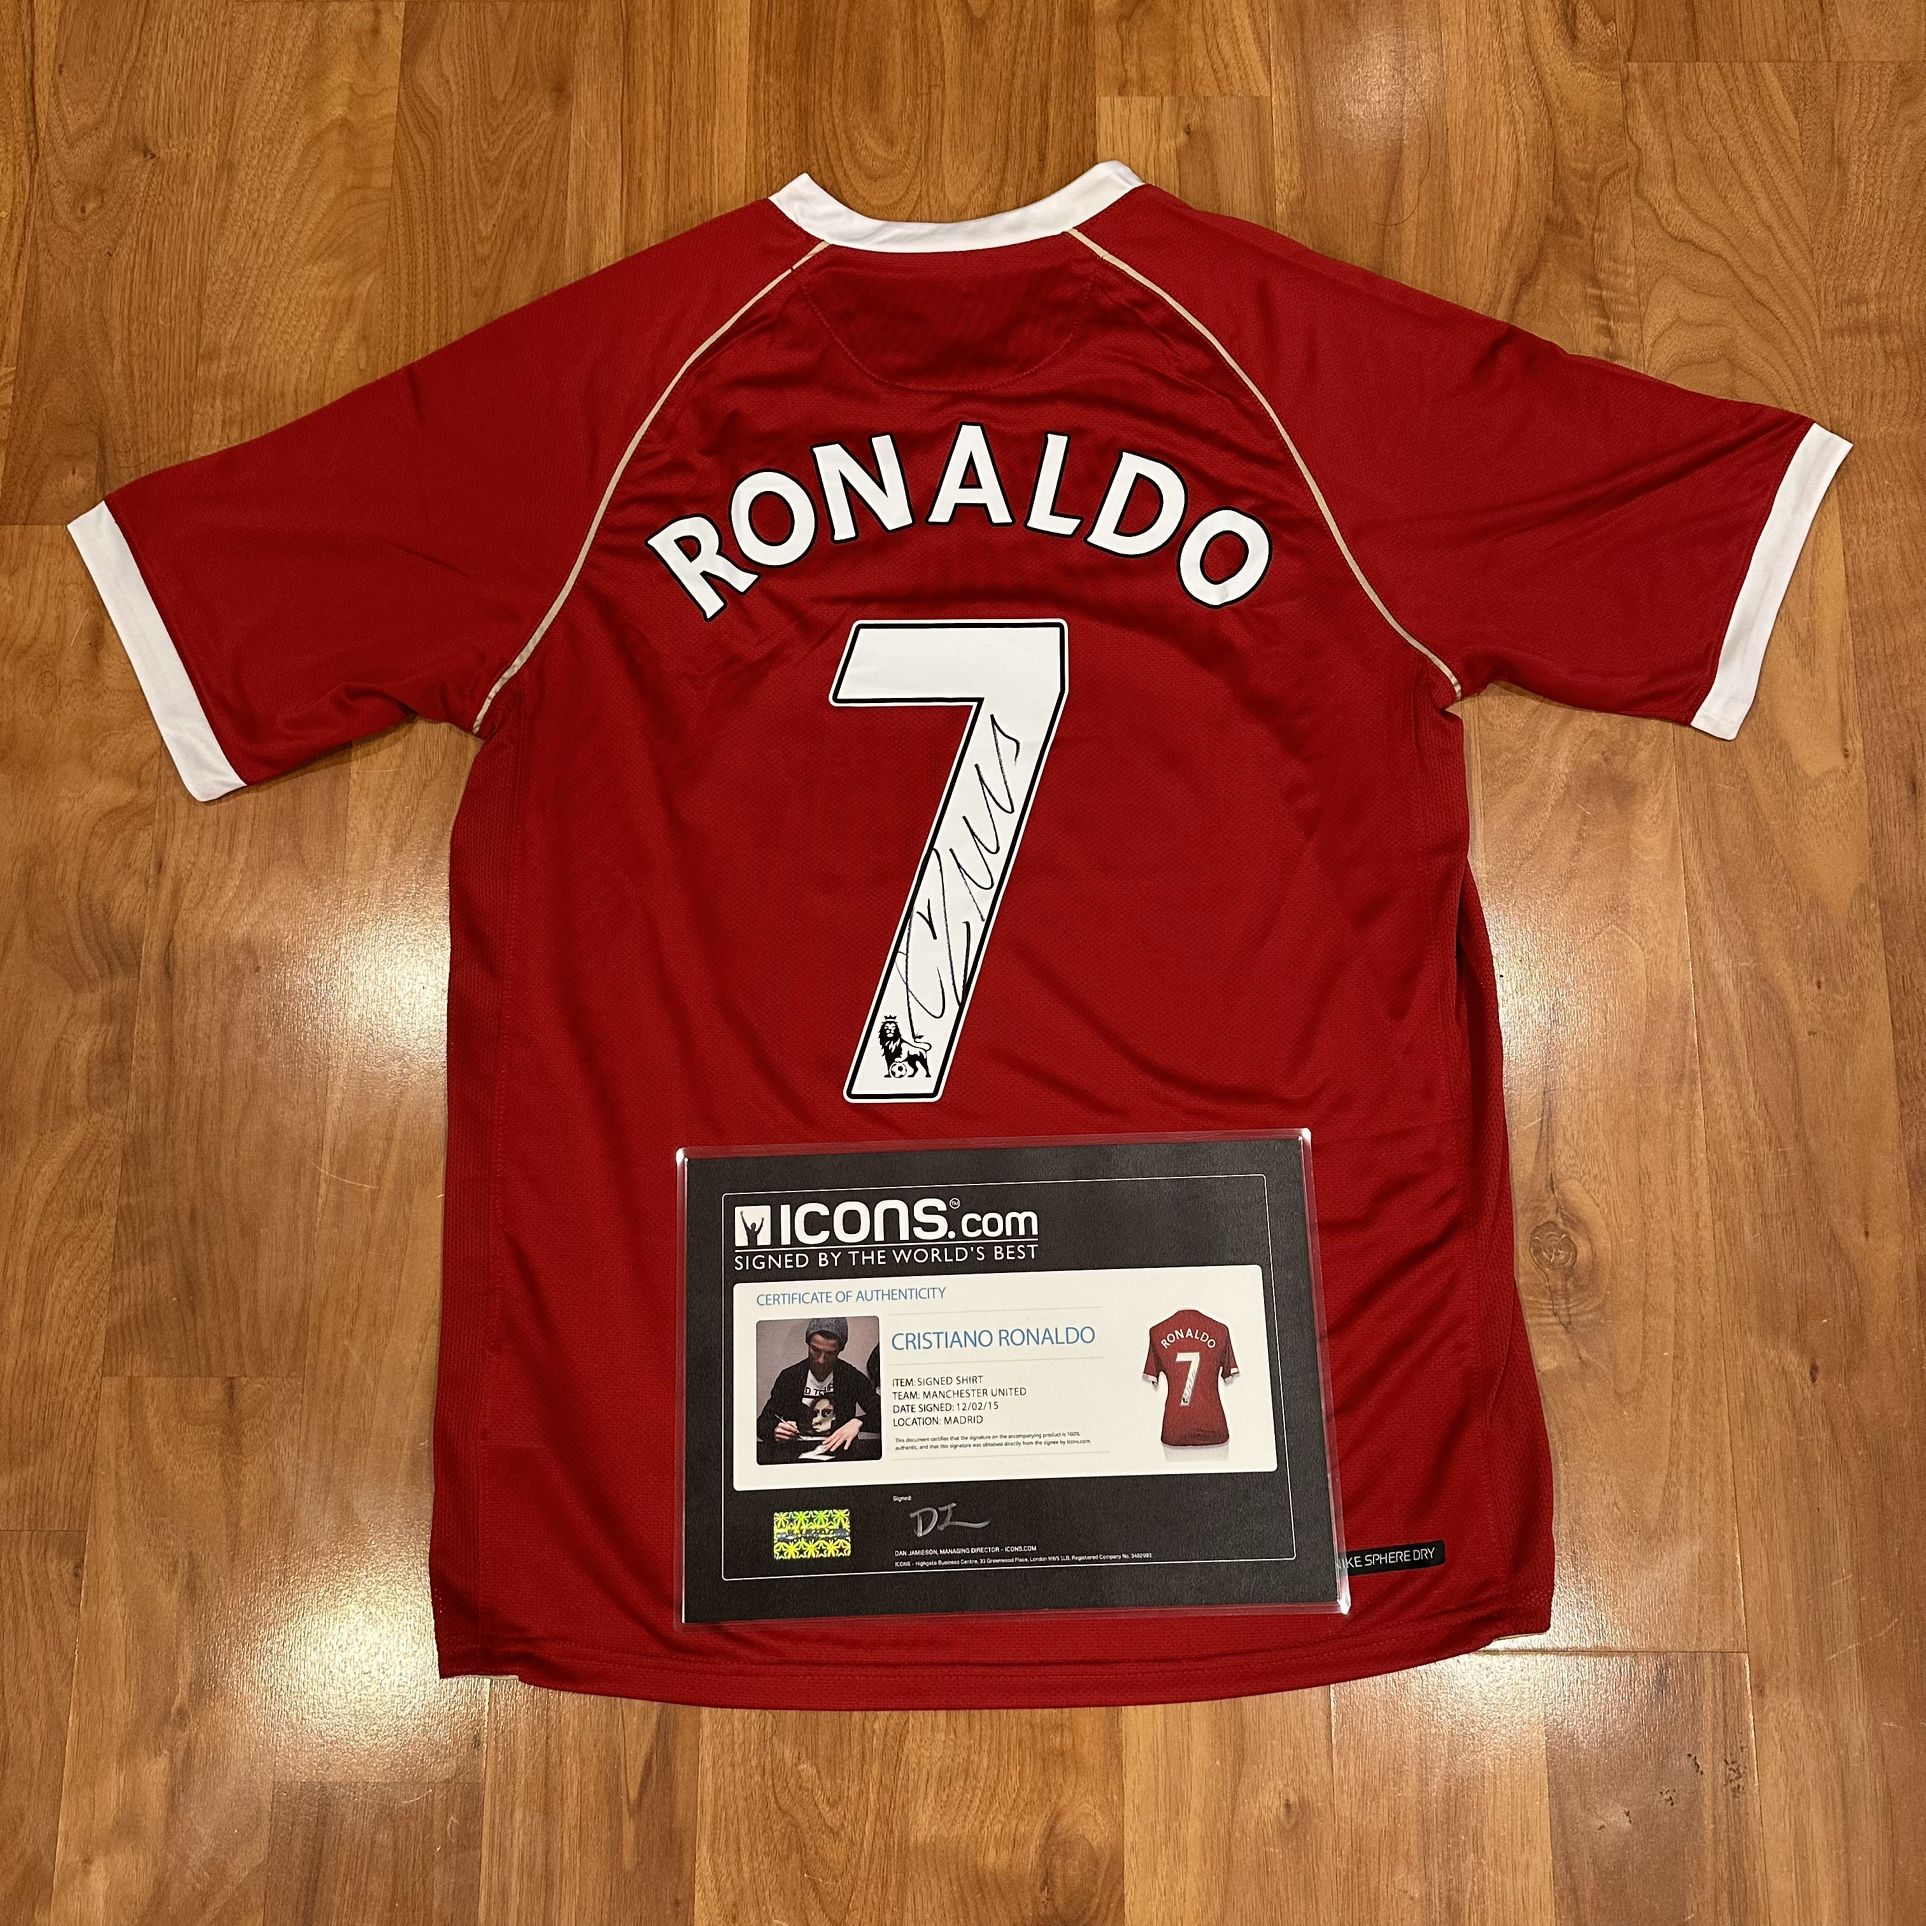 Cristiano Ronaldo Autographed Manchester United Jersey